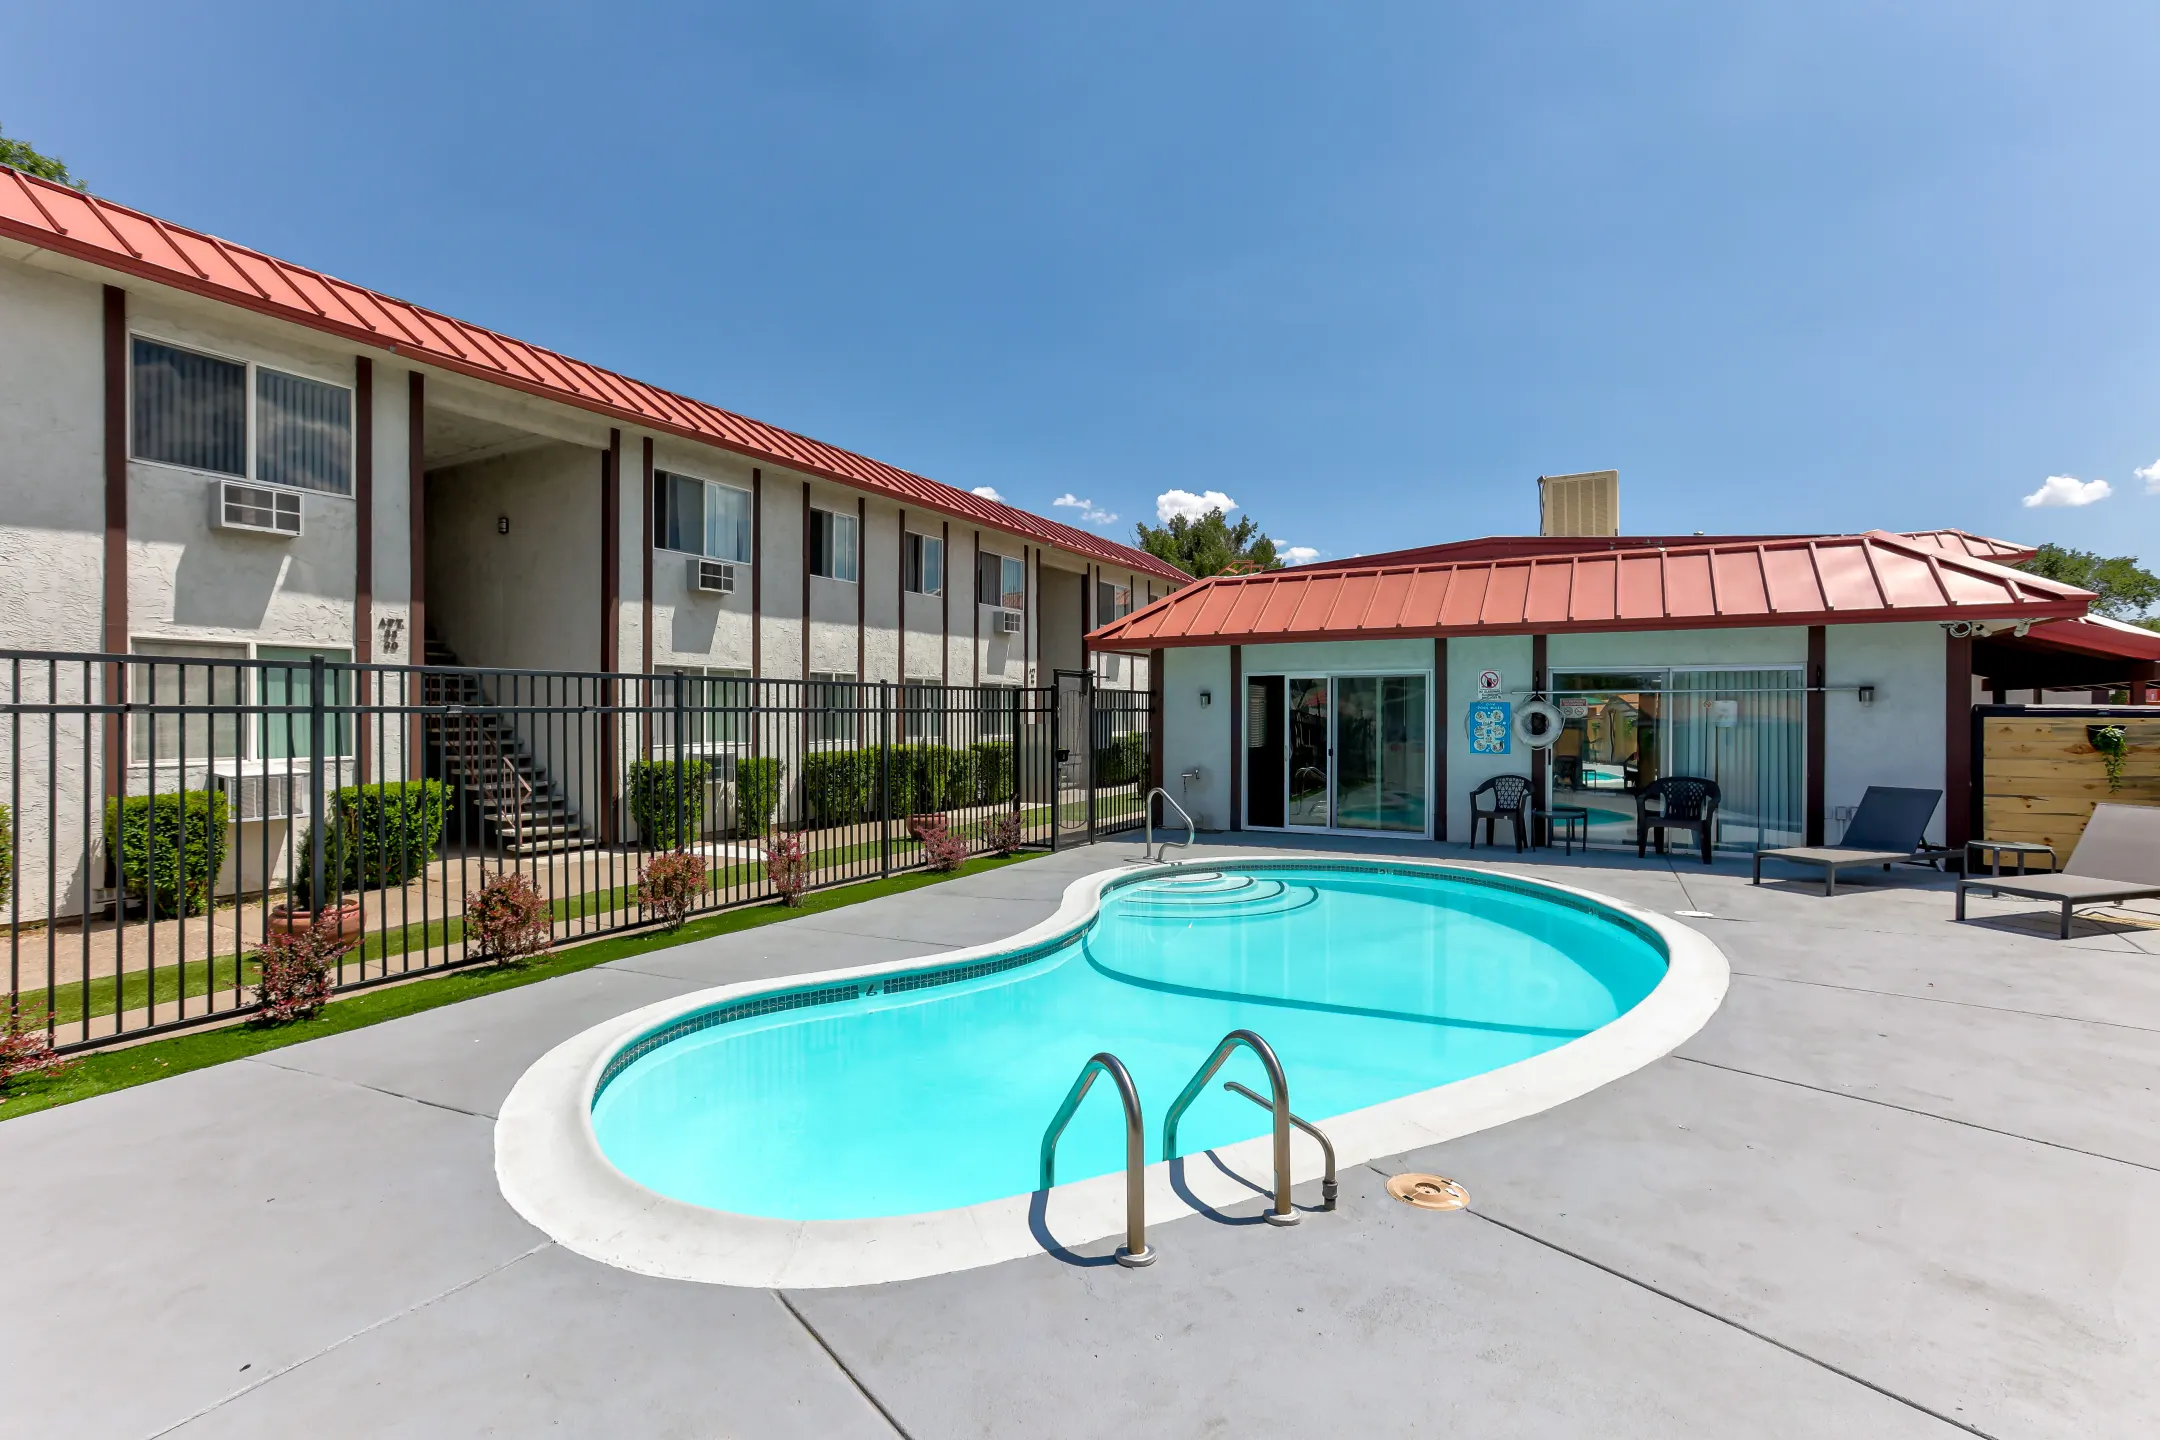 Pool - Moana Apartment Homes - Reno, NV